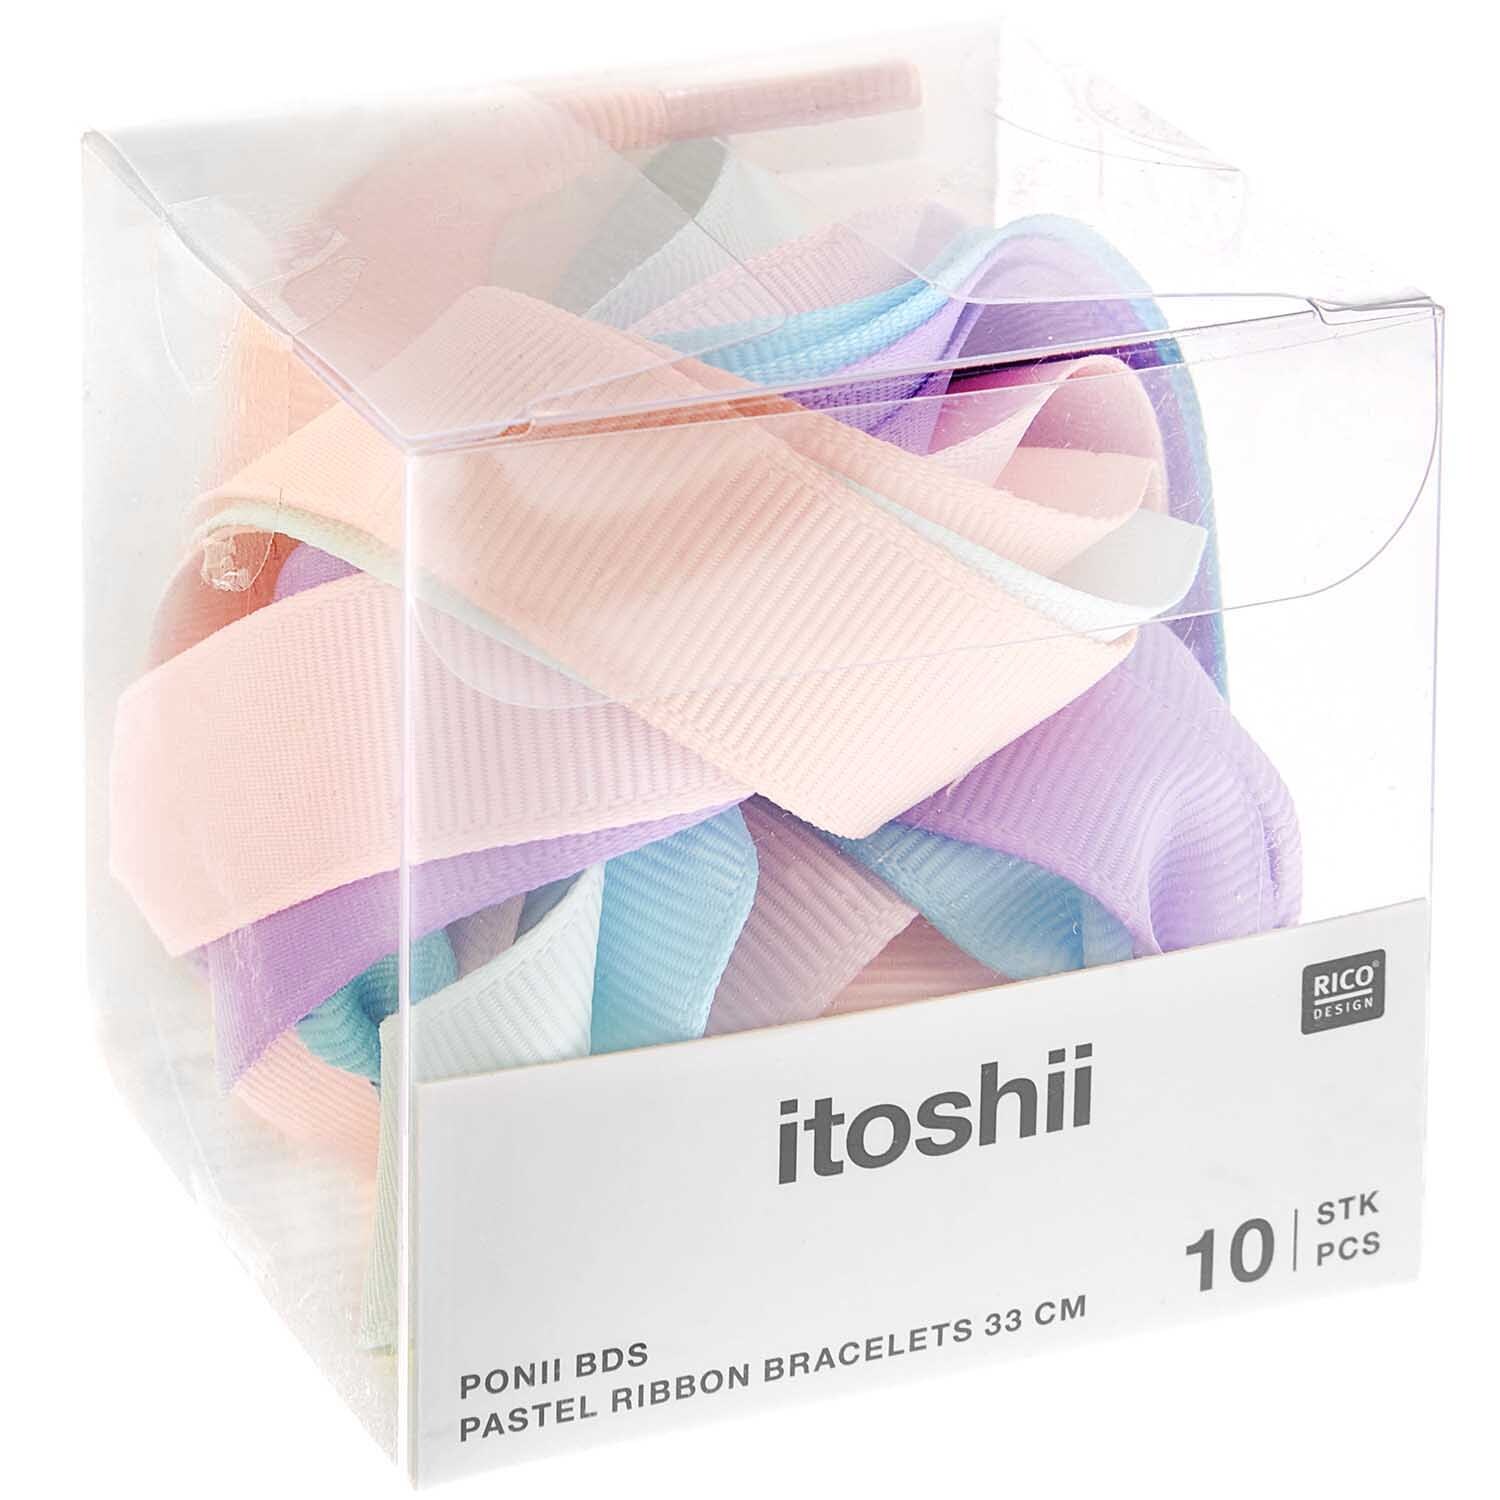 itoshii - Ponii Beads Ripsband Armbänder pastell 